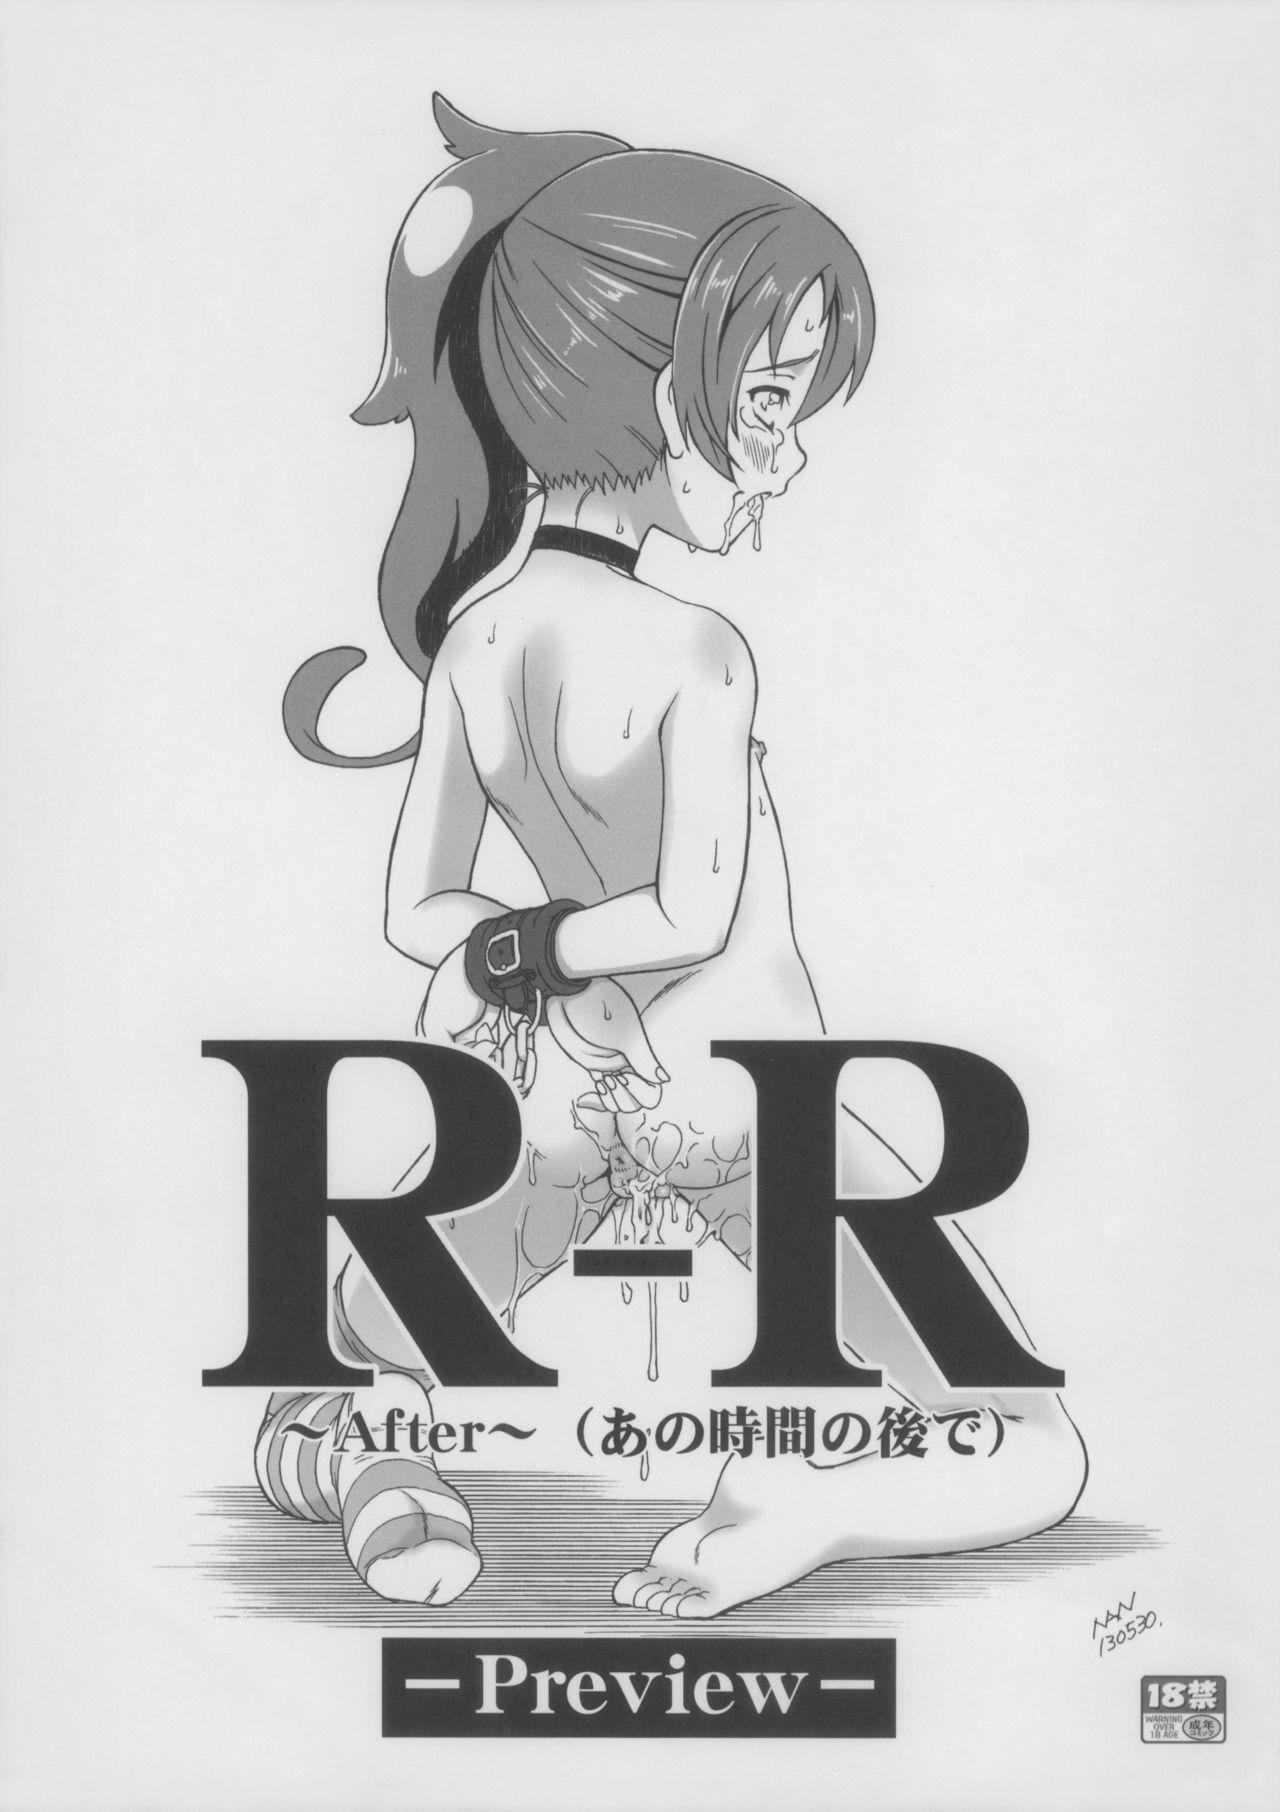 Fucking (Puniket 27) [Idenshi no Fune (Nanjou Asuka)] R-R ~After~ (Ano Jikan no Ato de) -Preview- (Chousoku Henkei Gyrozetter) - Chousoku henkei gyrozetter Realsex - Page 1